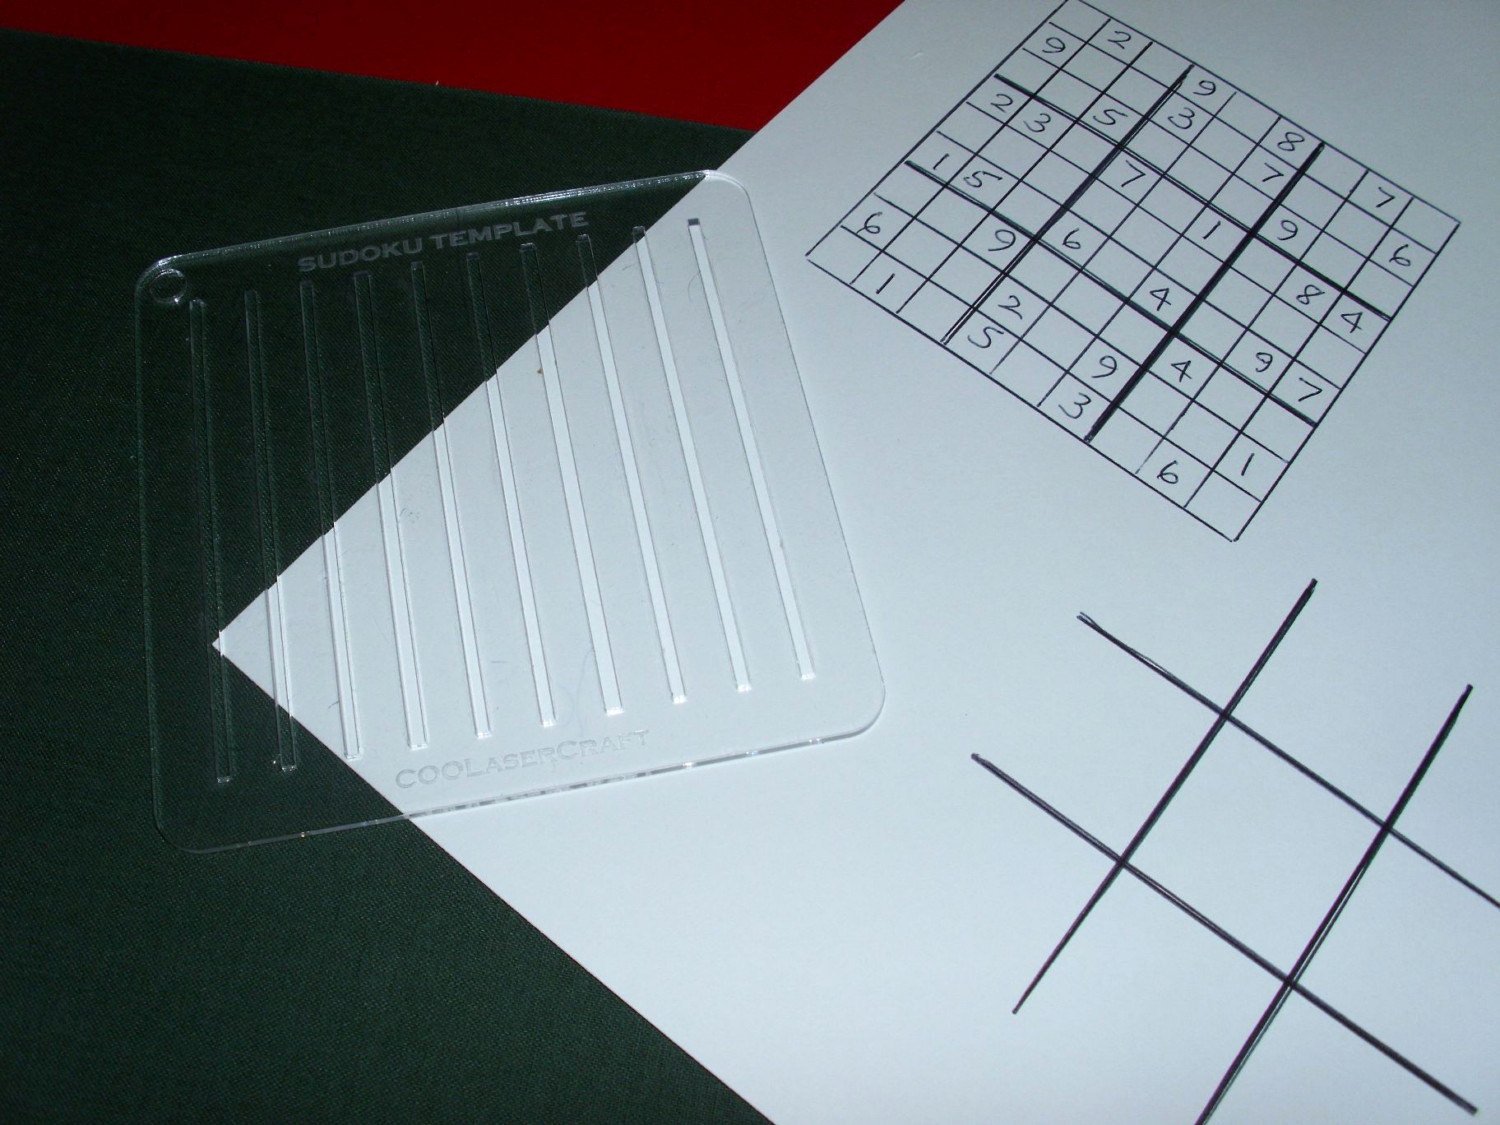 Sudoku Grid Template Unique Sudoku Puzzle Grid Template Flexible Plastic by Jptreeman